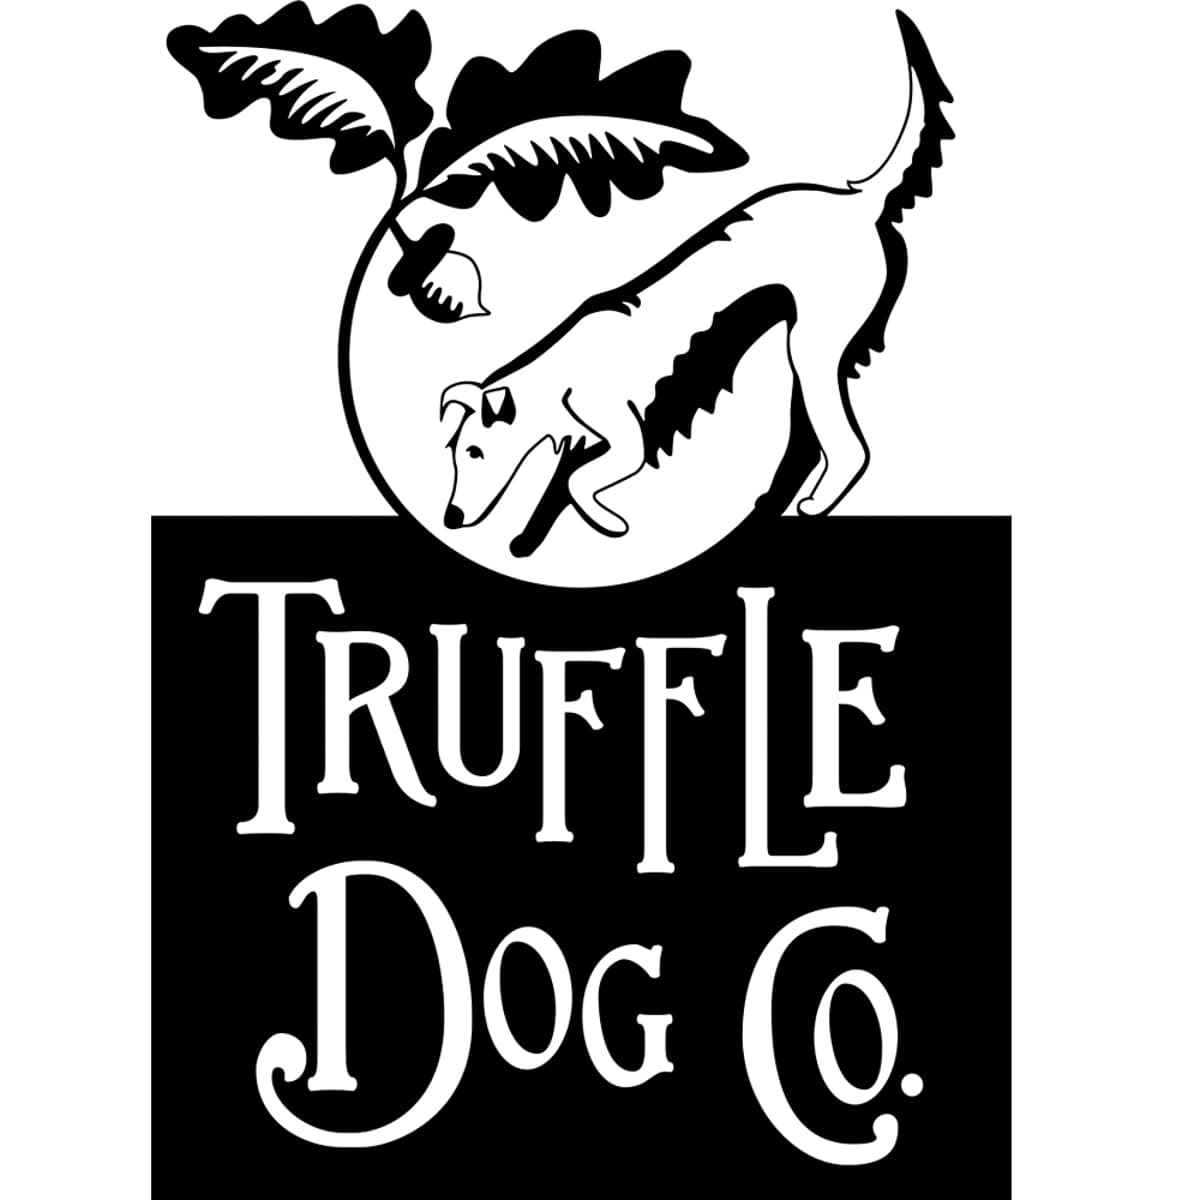 The logo for truffle dog company. 